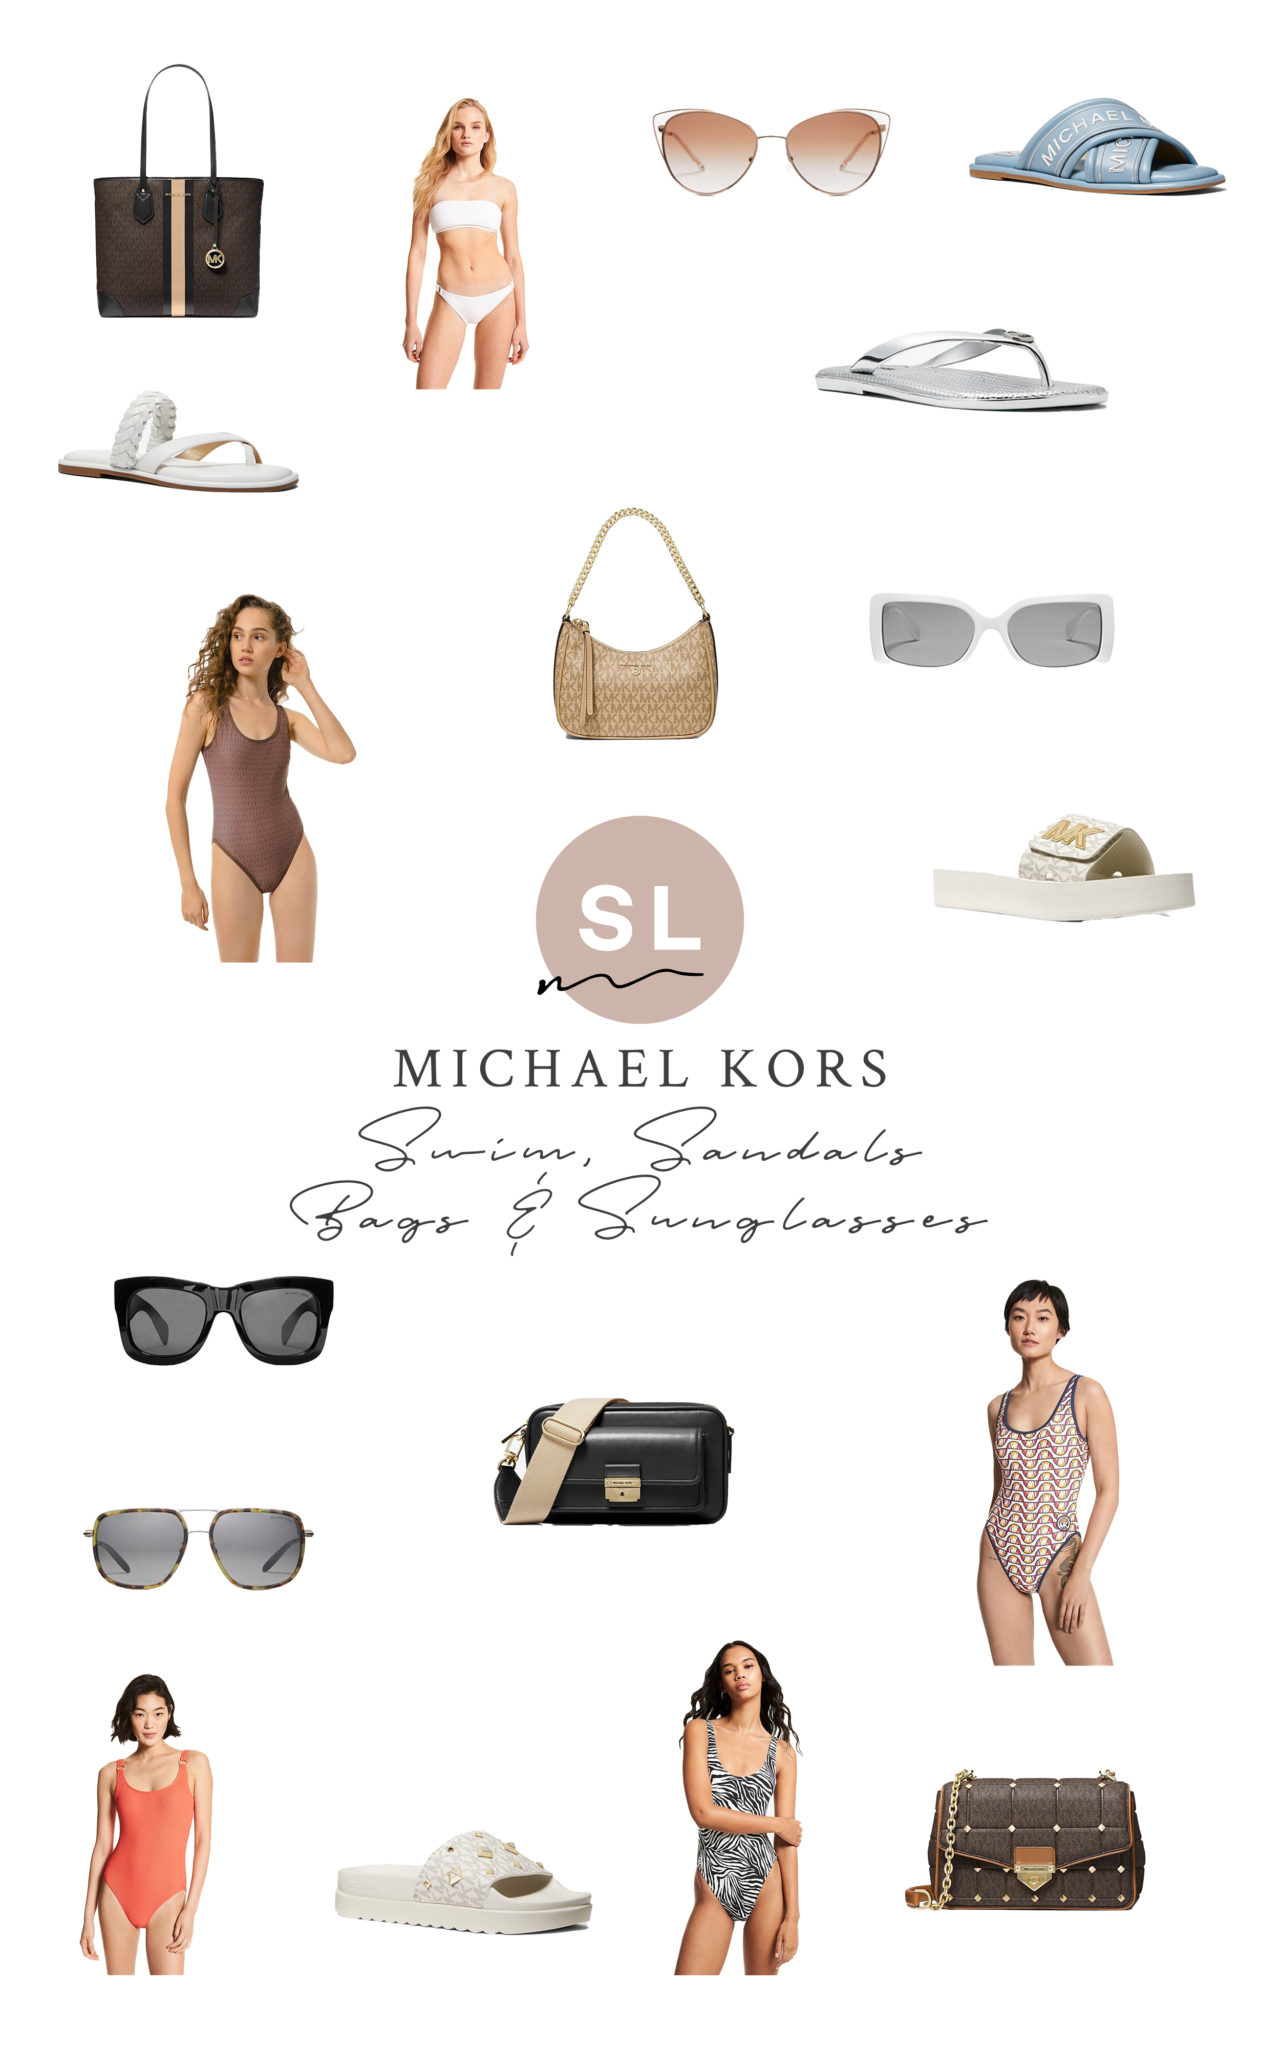 Michael Kors Swim & Accessories